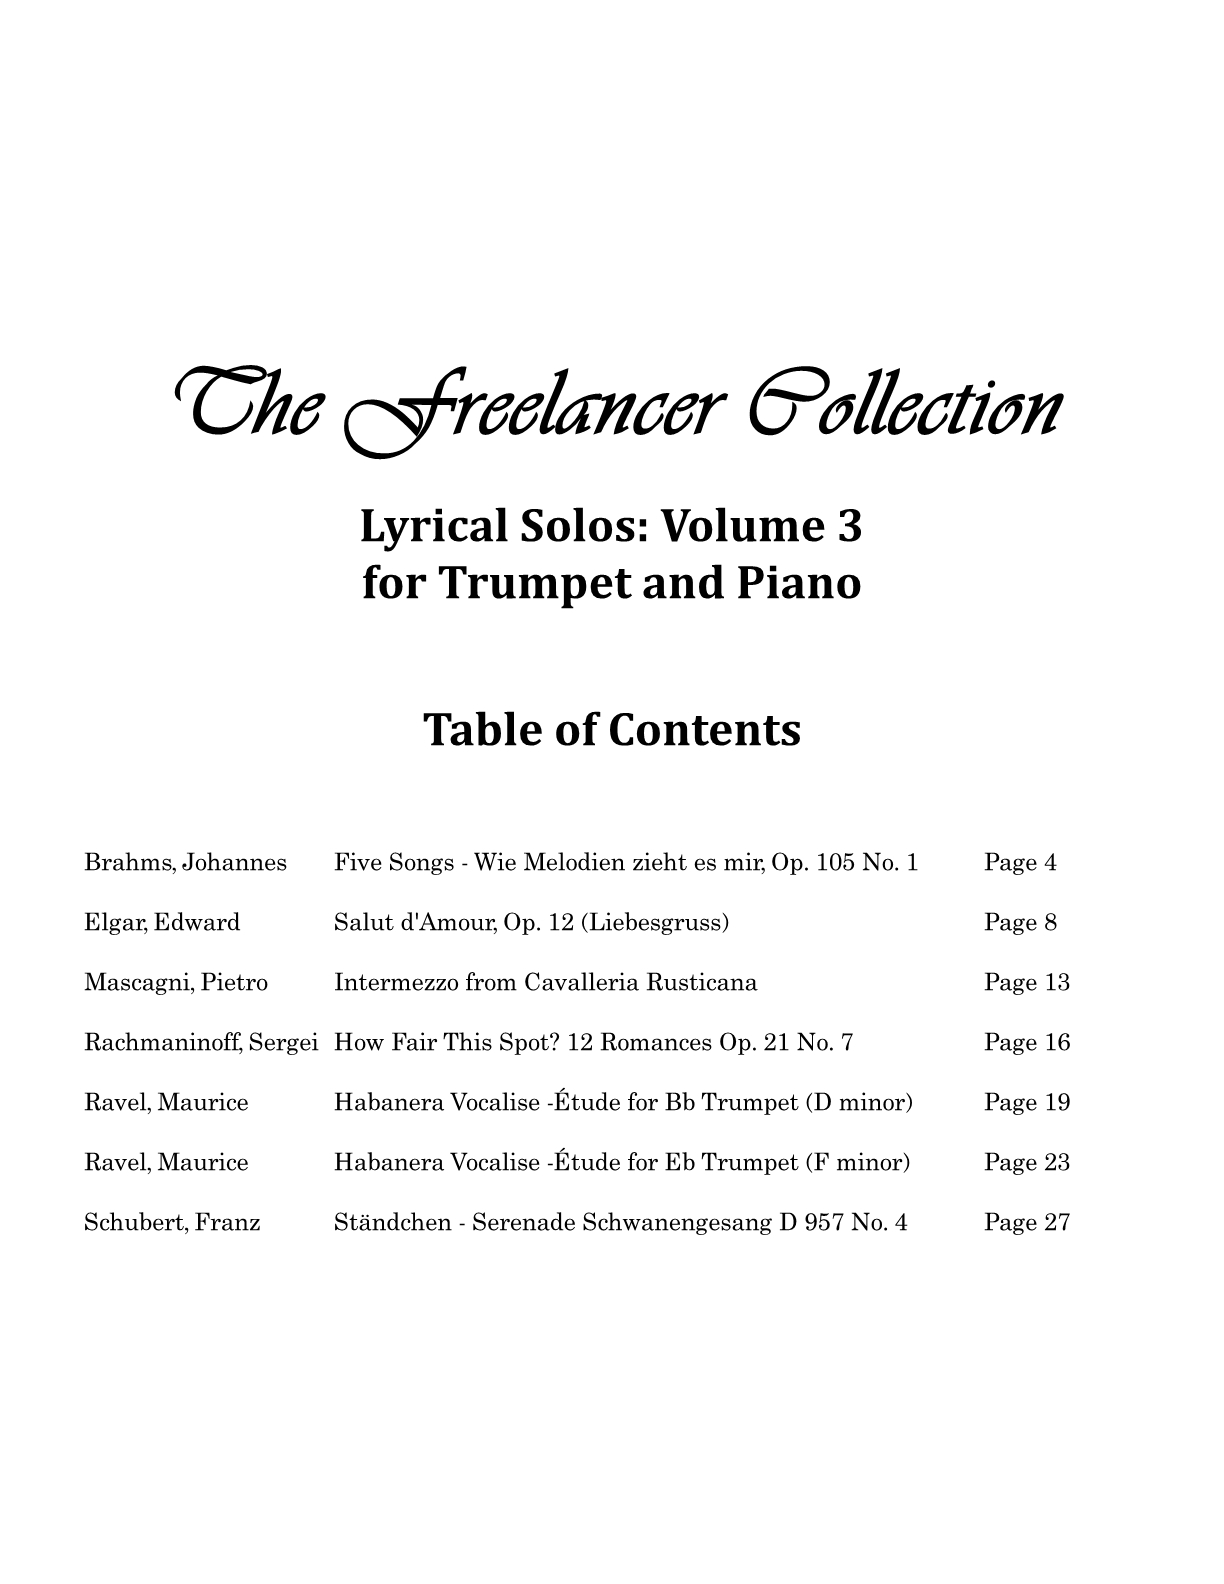 Hepler - Freelancer Collection Lyrical Solos Vol 3 (Trp & Piano)